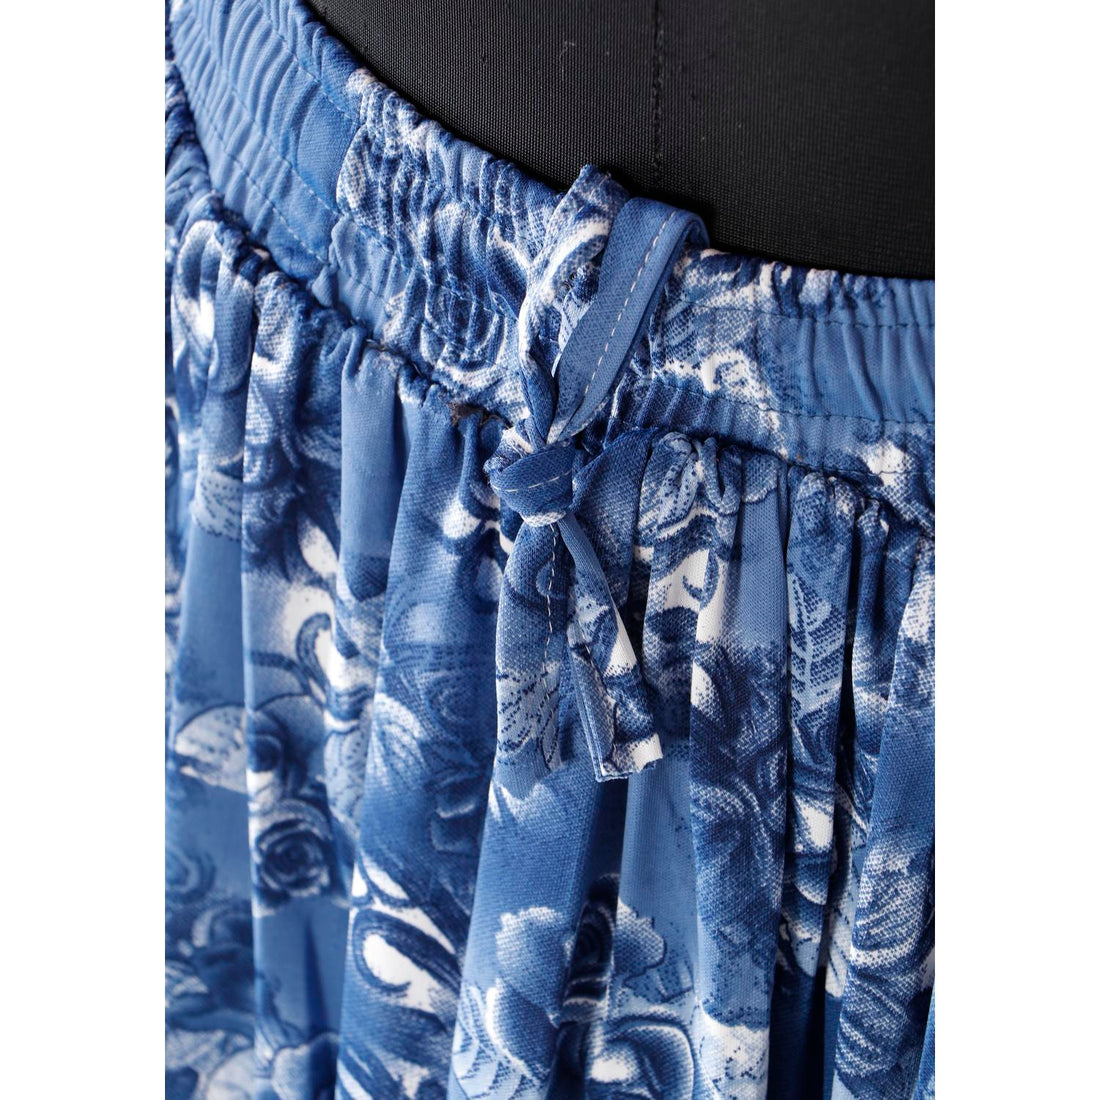 Blue Colour Floral Design Womens Skirt